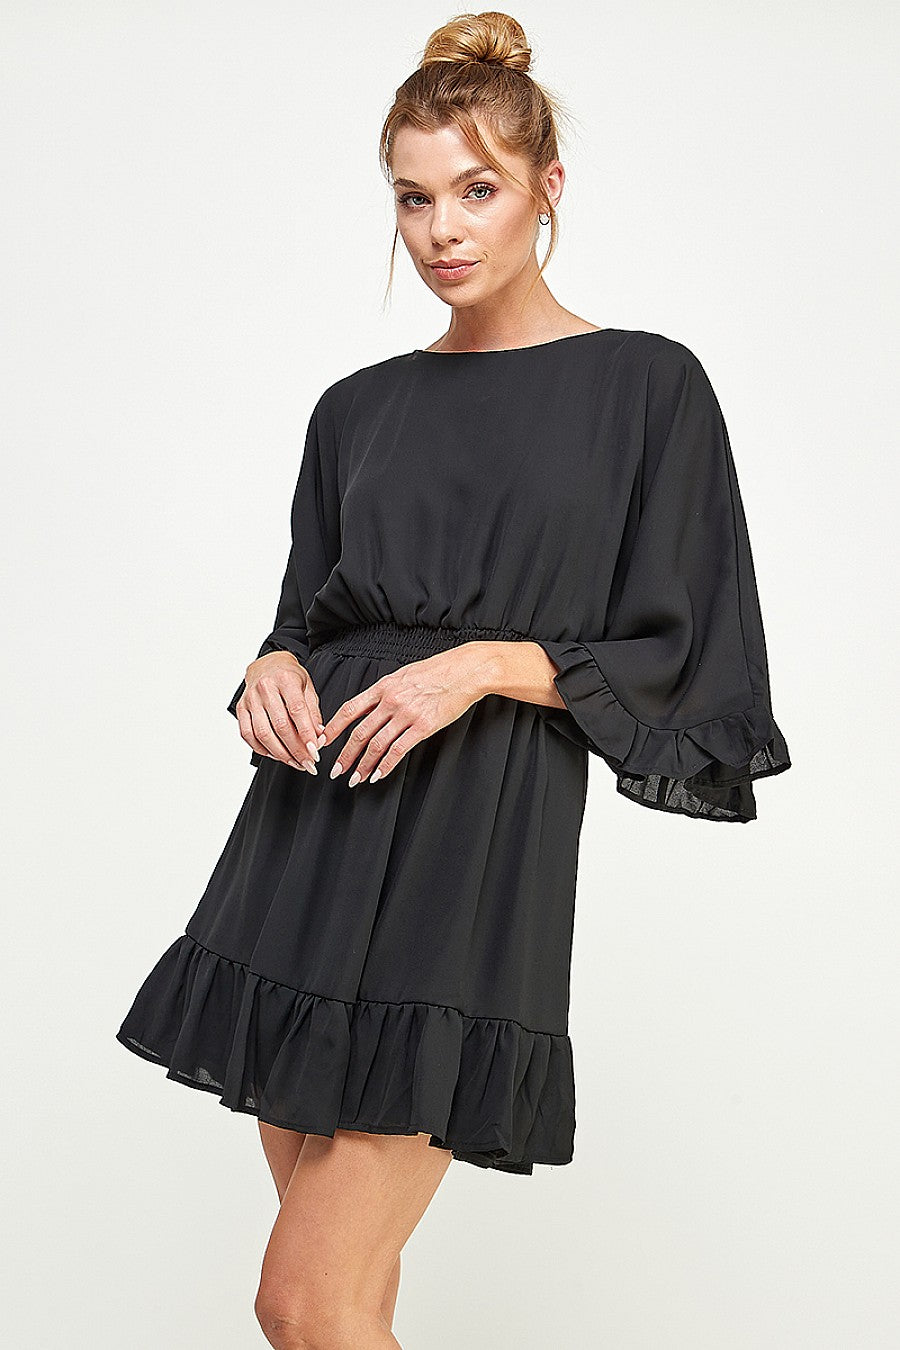 Cocktail Dresses Short Ruffled Sleeve Mini Dress Black